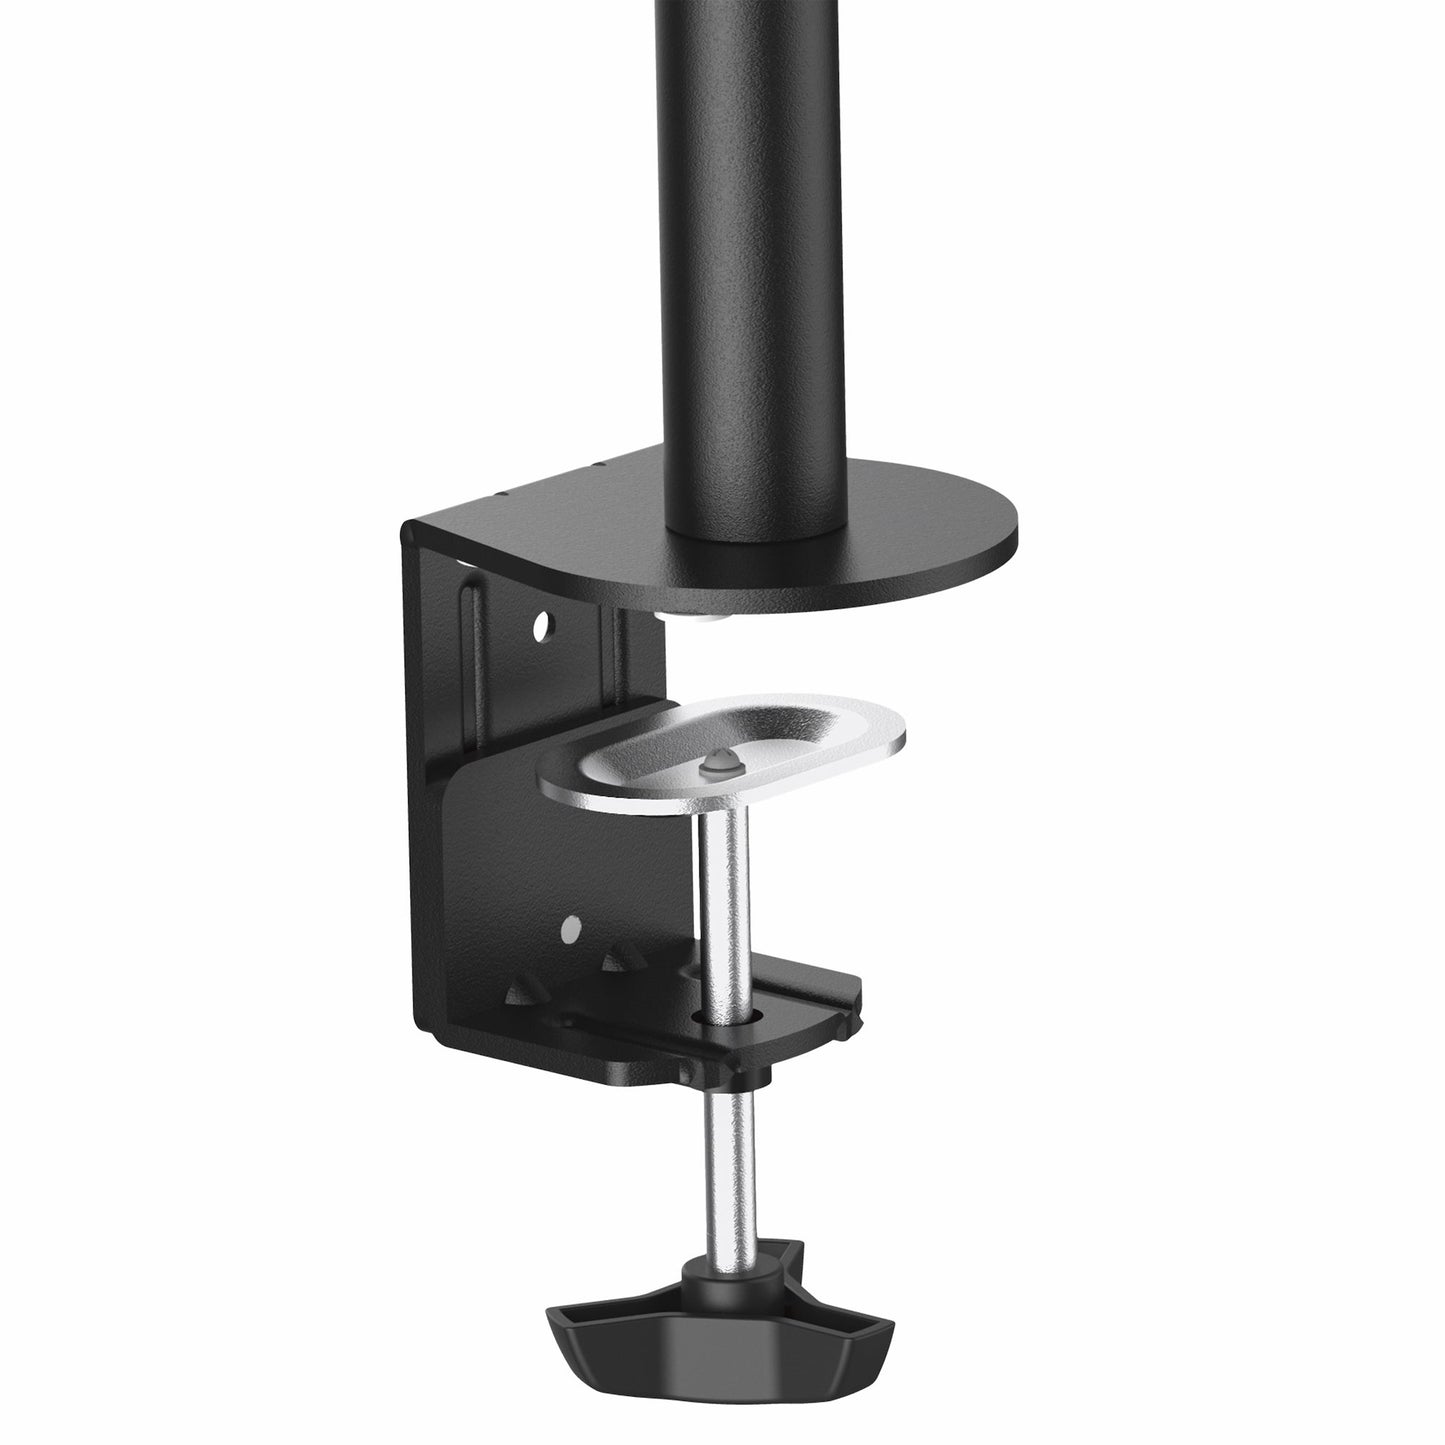 StarTech.com Desk Mount Monitor Arm for up to 34" (8 kg) VESA Compatible Displays - Articulating Pole Mount Single Monitor Arm - Ergonomic Height Adjustable Monitor Mount - Desk Clamp/Grommet-3